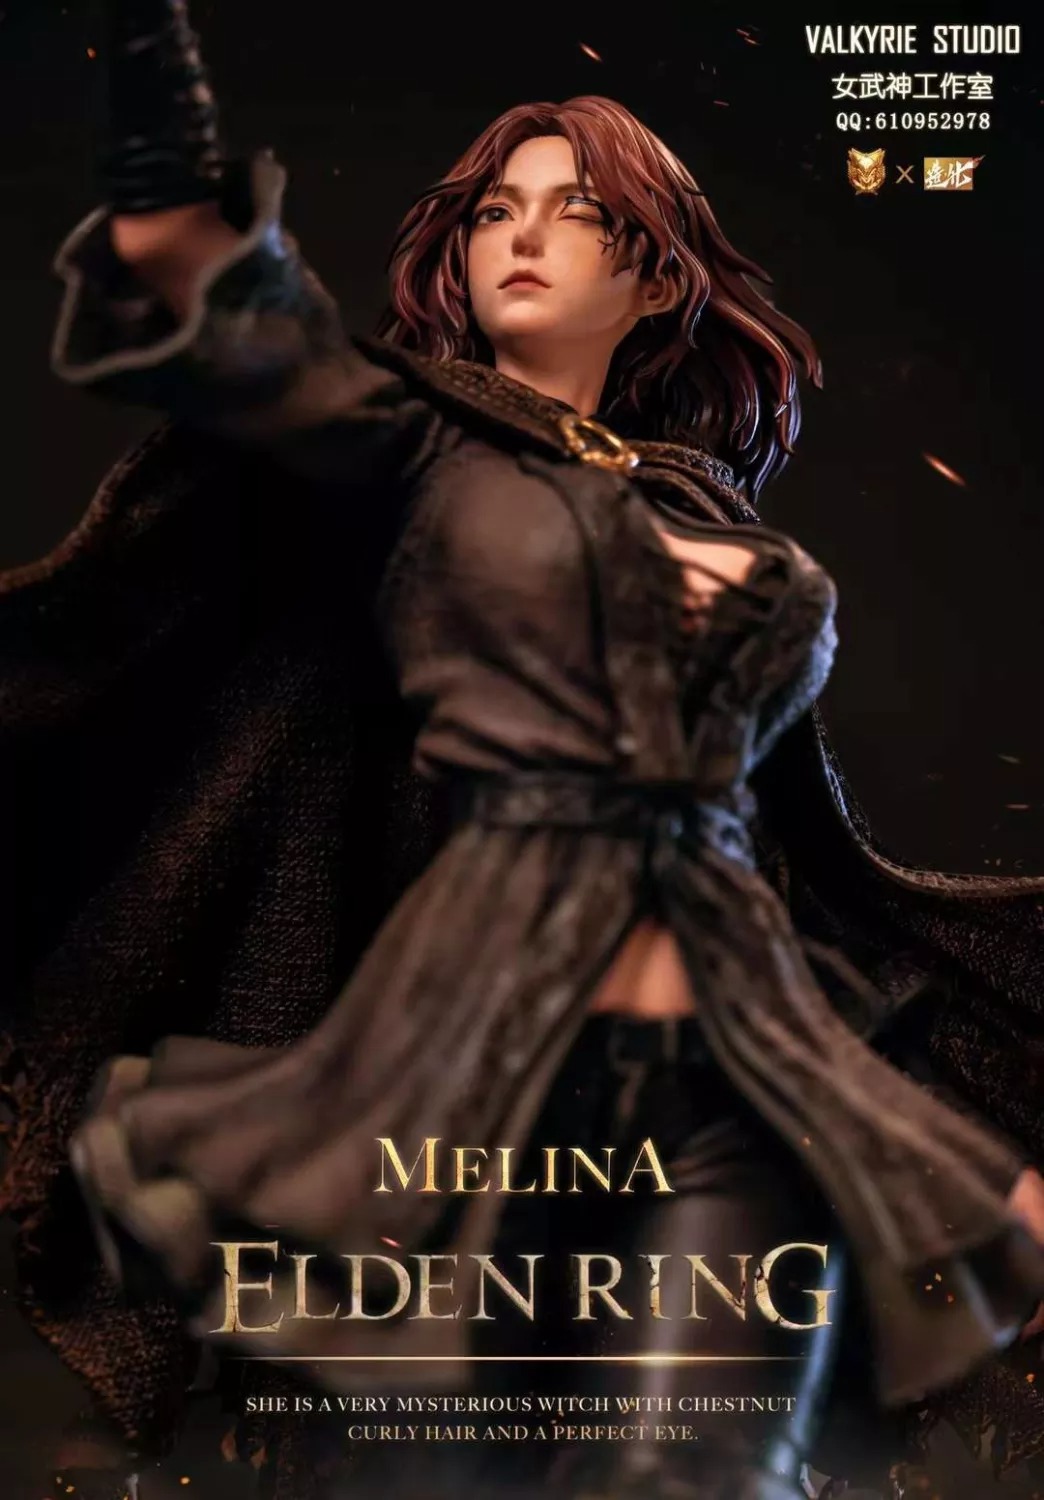 Melina armor elden ring